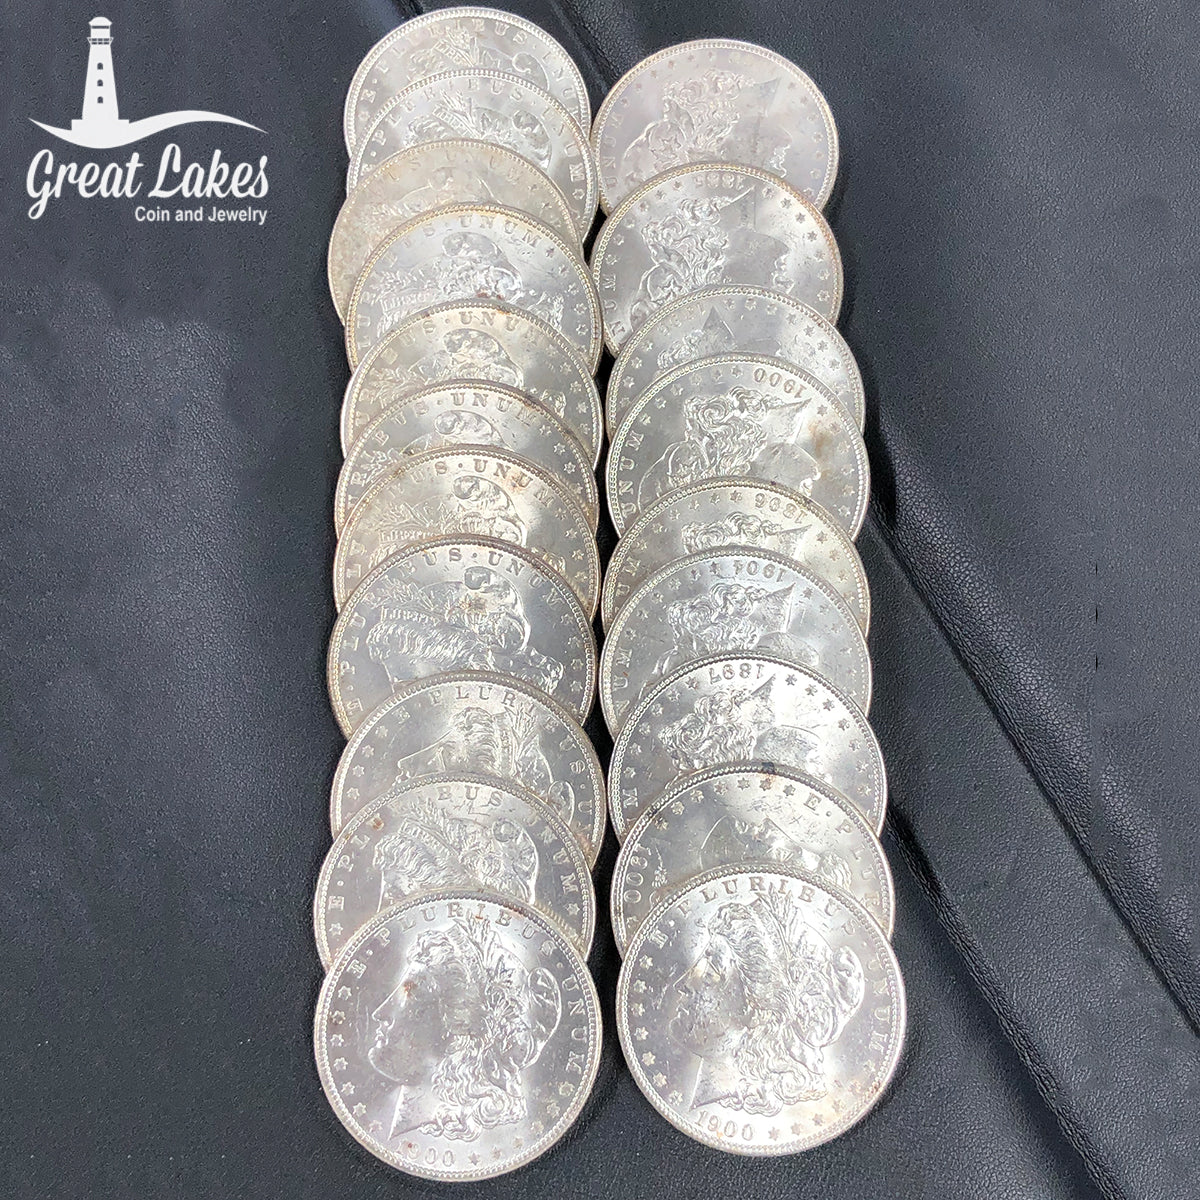 Lot of 20 Mixed Date Pre 21 Morgan Silver Dollars (BU)